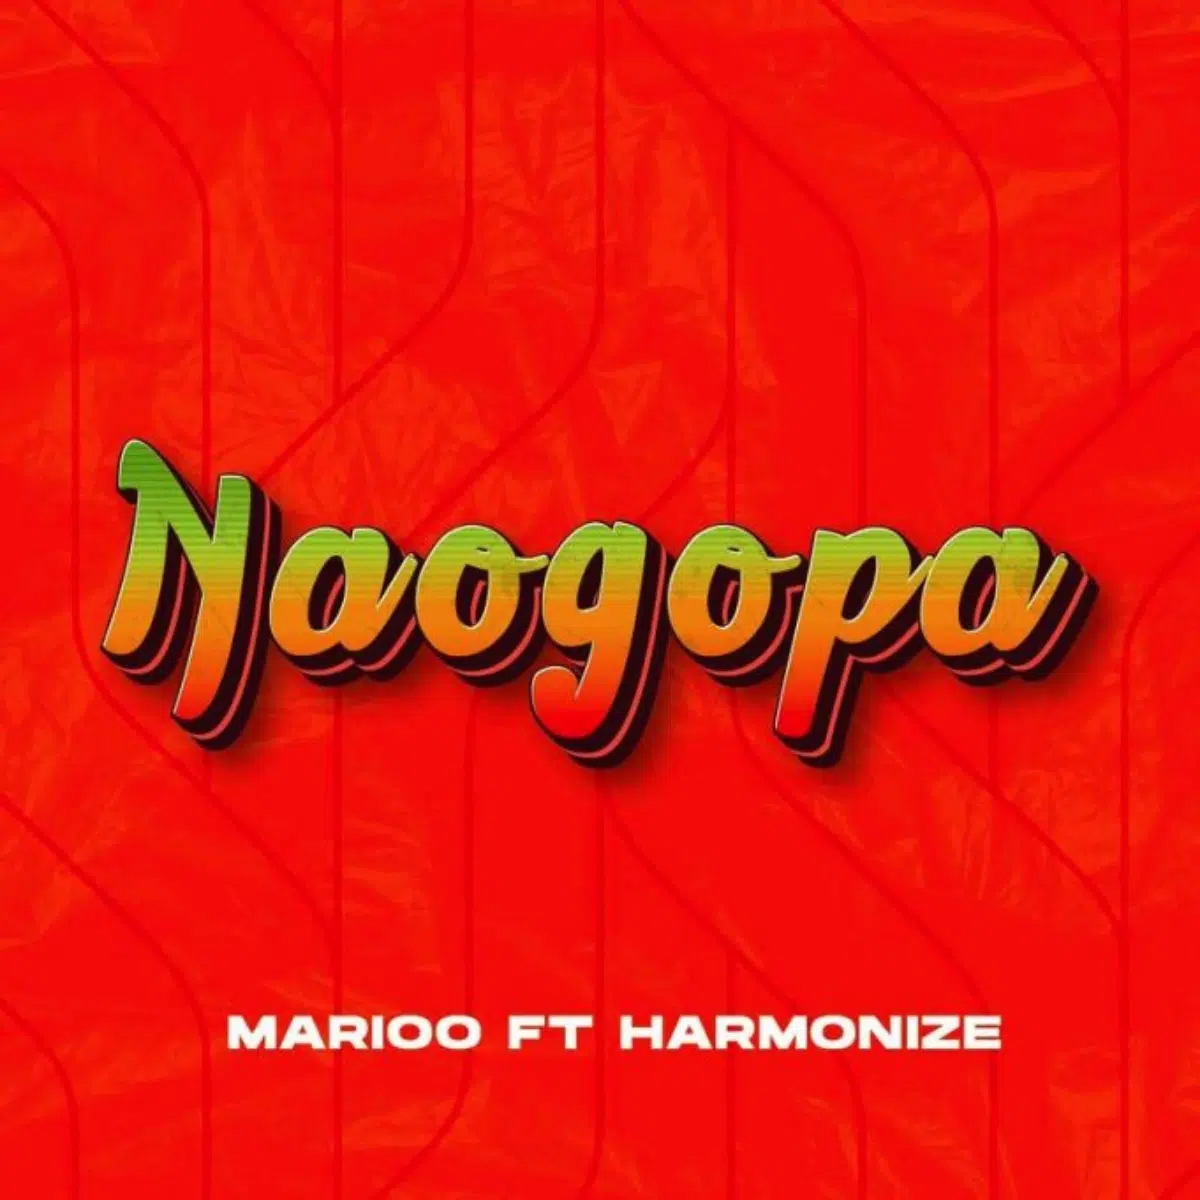 DOWNLOAD: Marioo Ft Harmonize – “NAOGOPA” Video + Audio Mp3